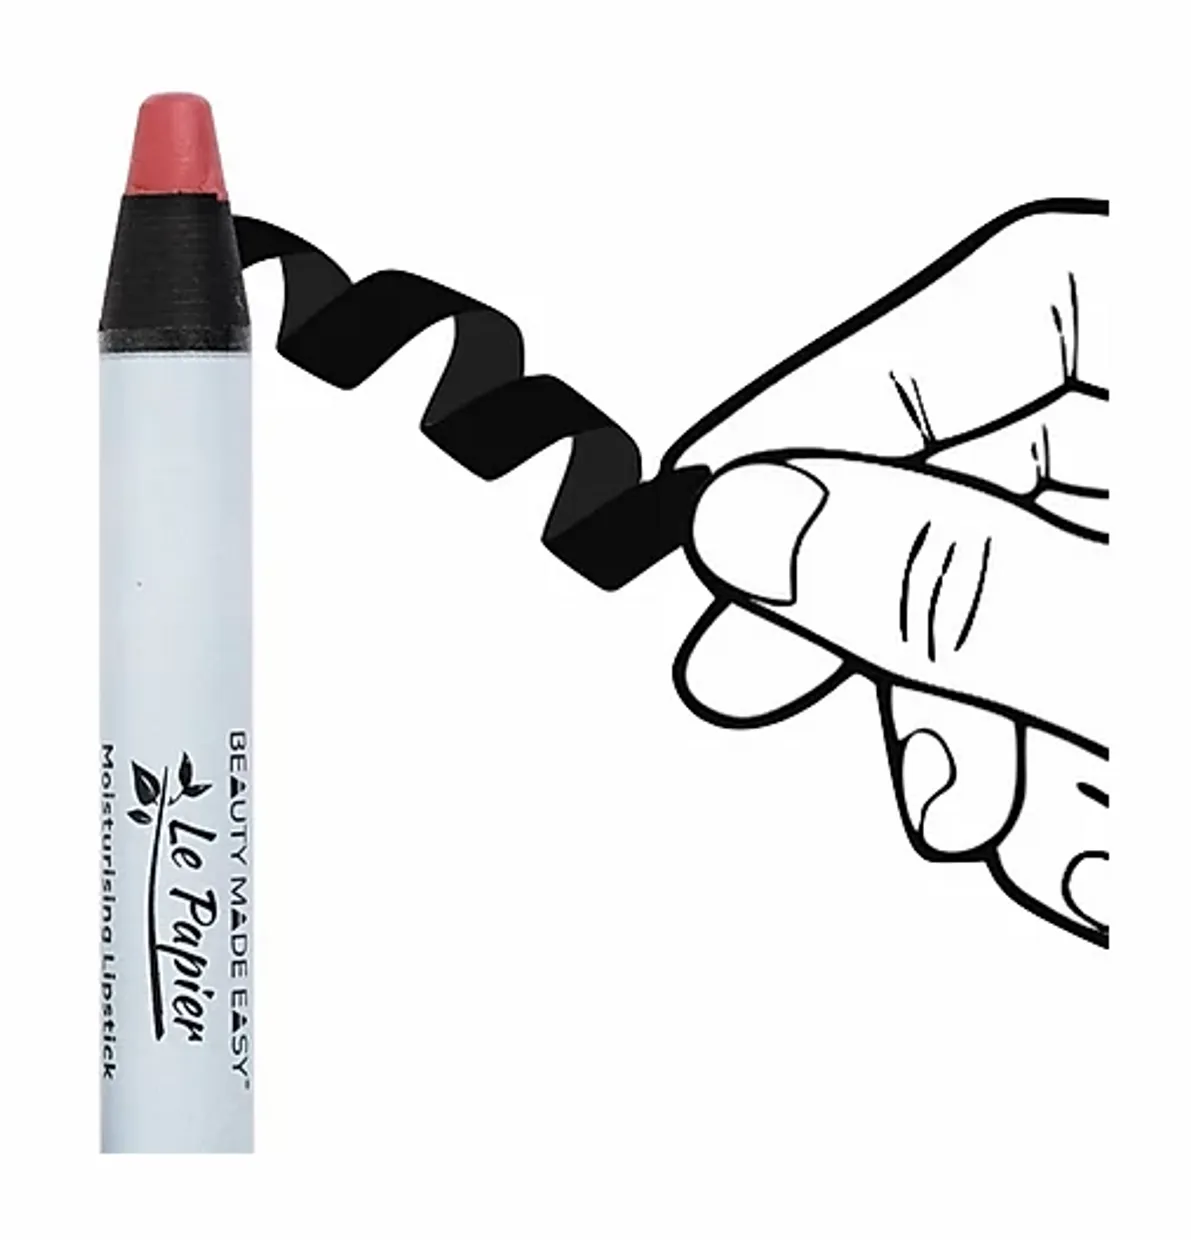 Glossy nude lipstick blossom, plastic free - Le Papier